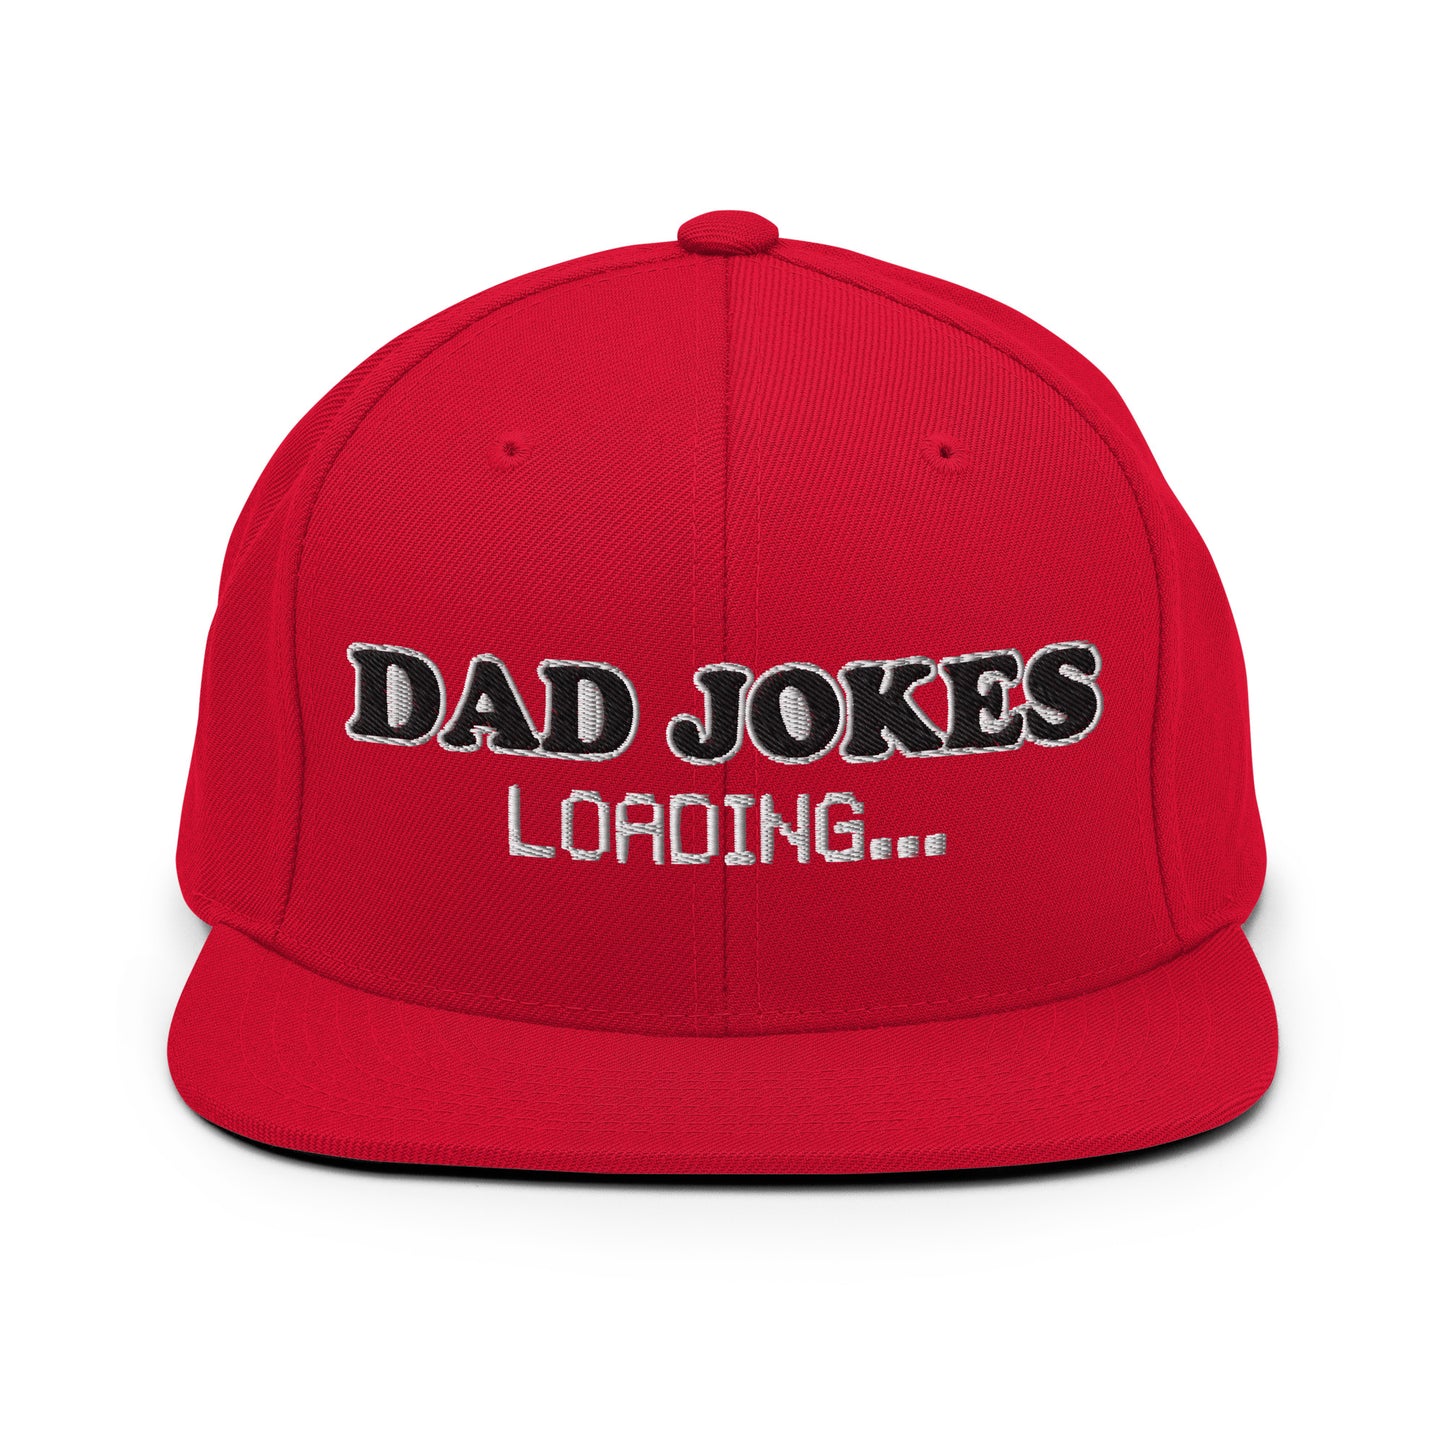 DAD JOKES Loading... Snapback Hat